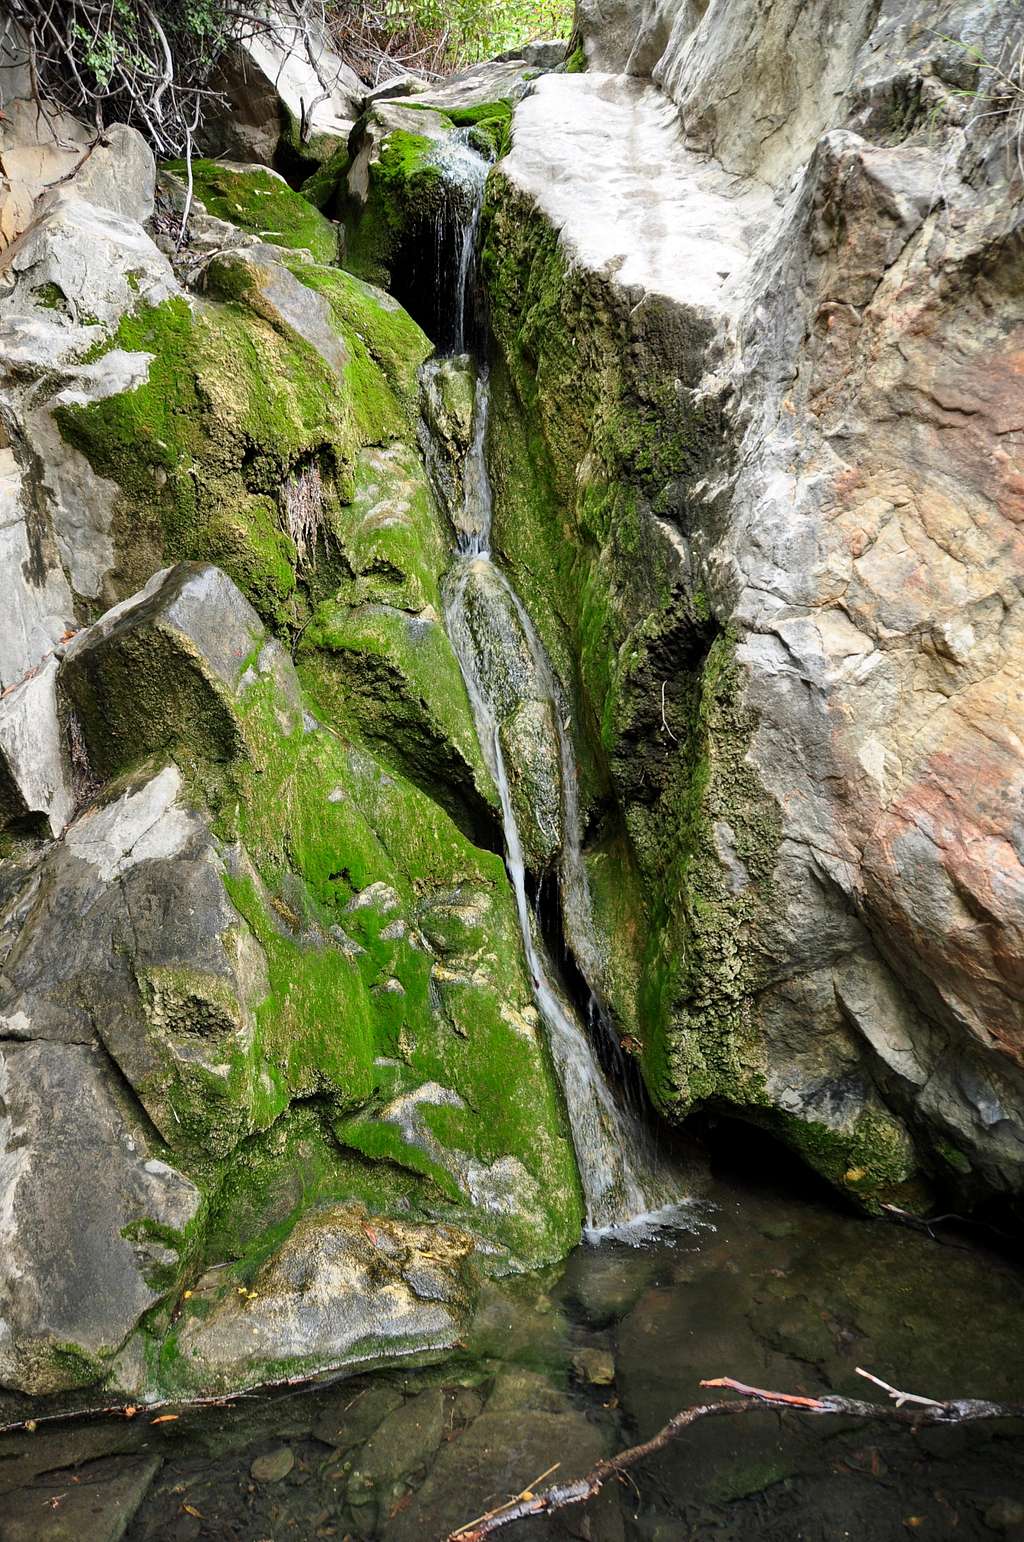 Mini Waterfall along the trail